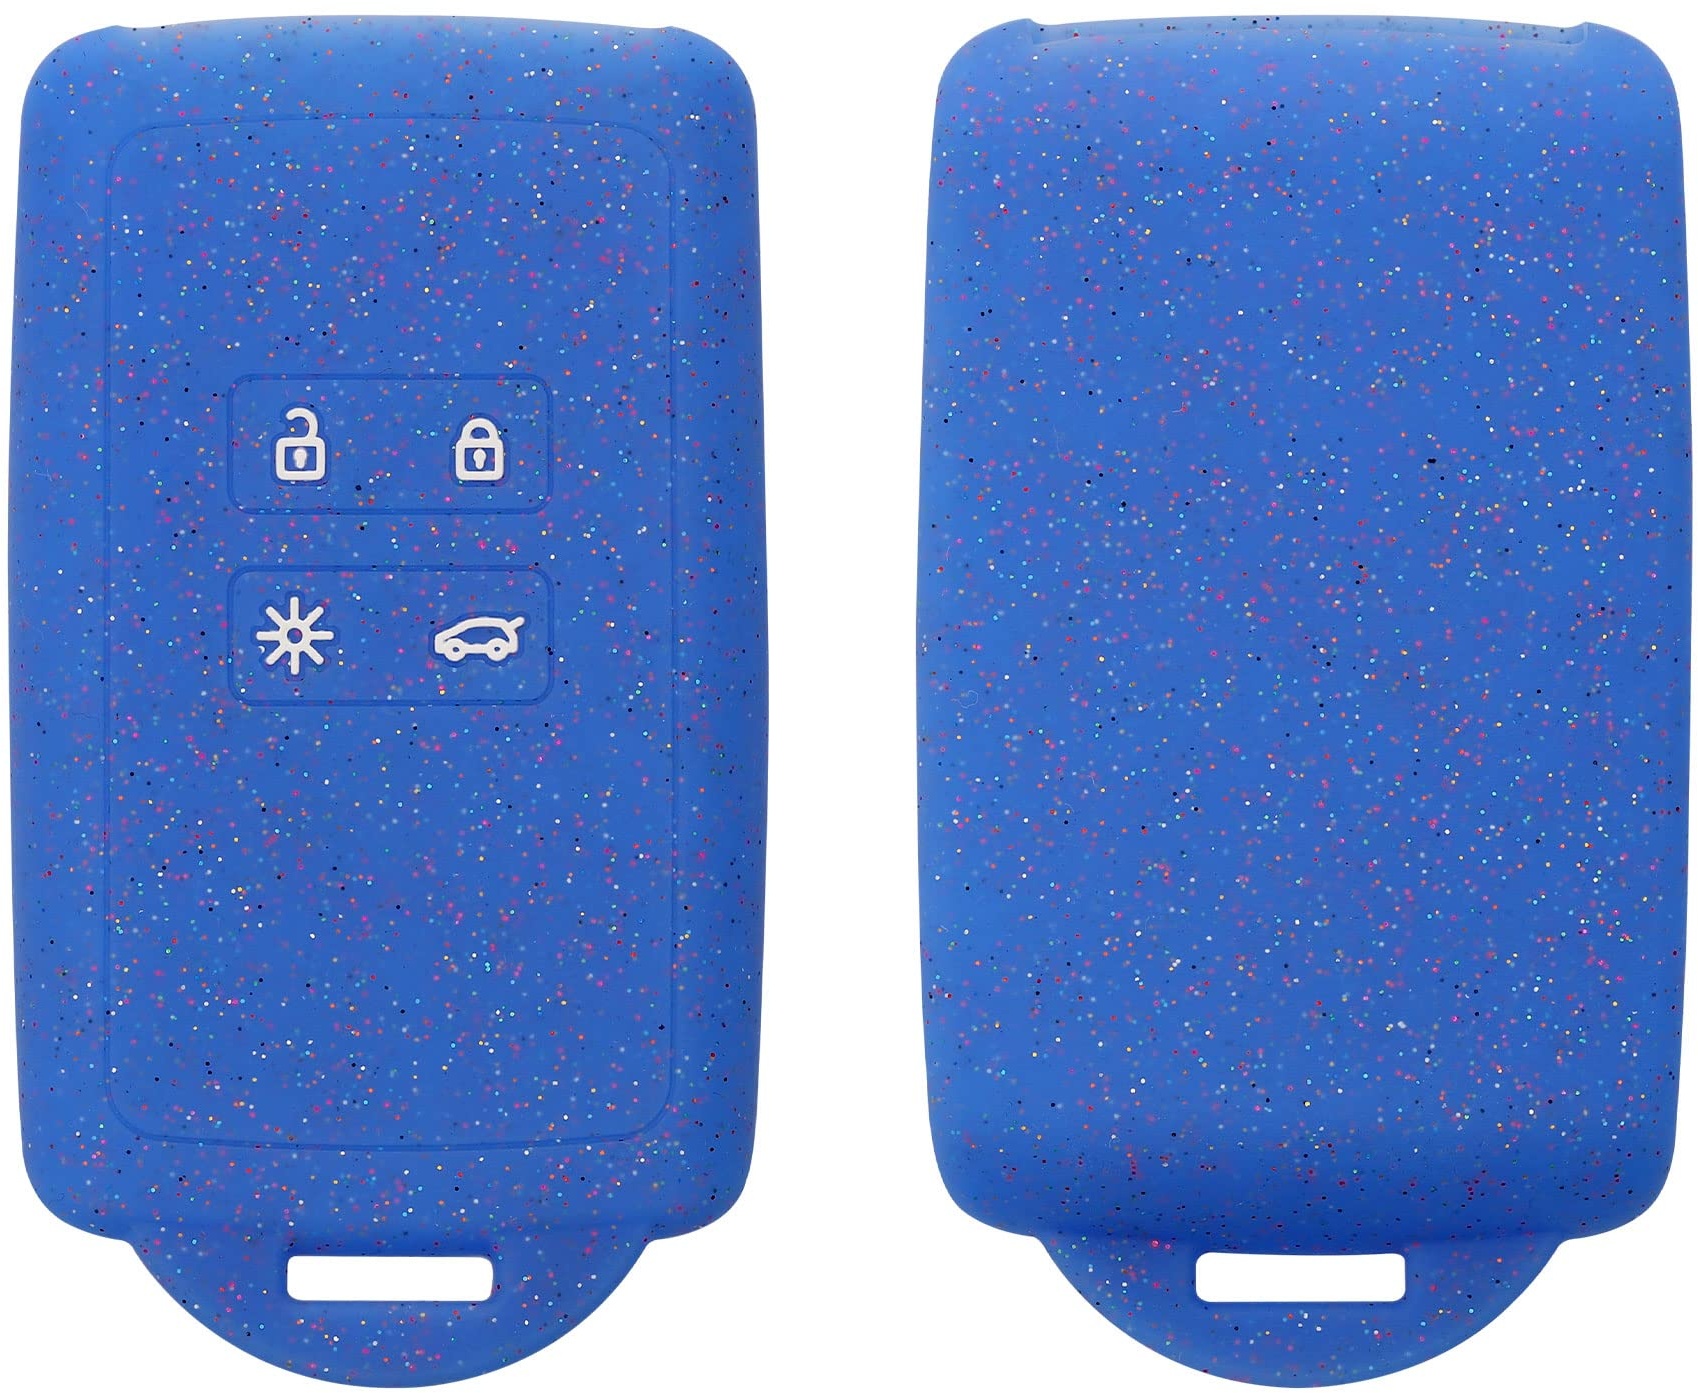 kwmobile Autoschlüssel Hülle kompatibel mit Renault 4-Tasten Smartkey Autoschlüssel (nur Keyless Go) Hülle - Glitzer Silikon Case - Schlüsselhülle in Dunkelblau